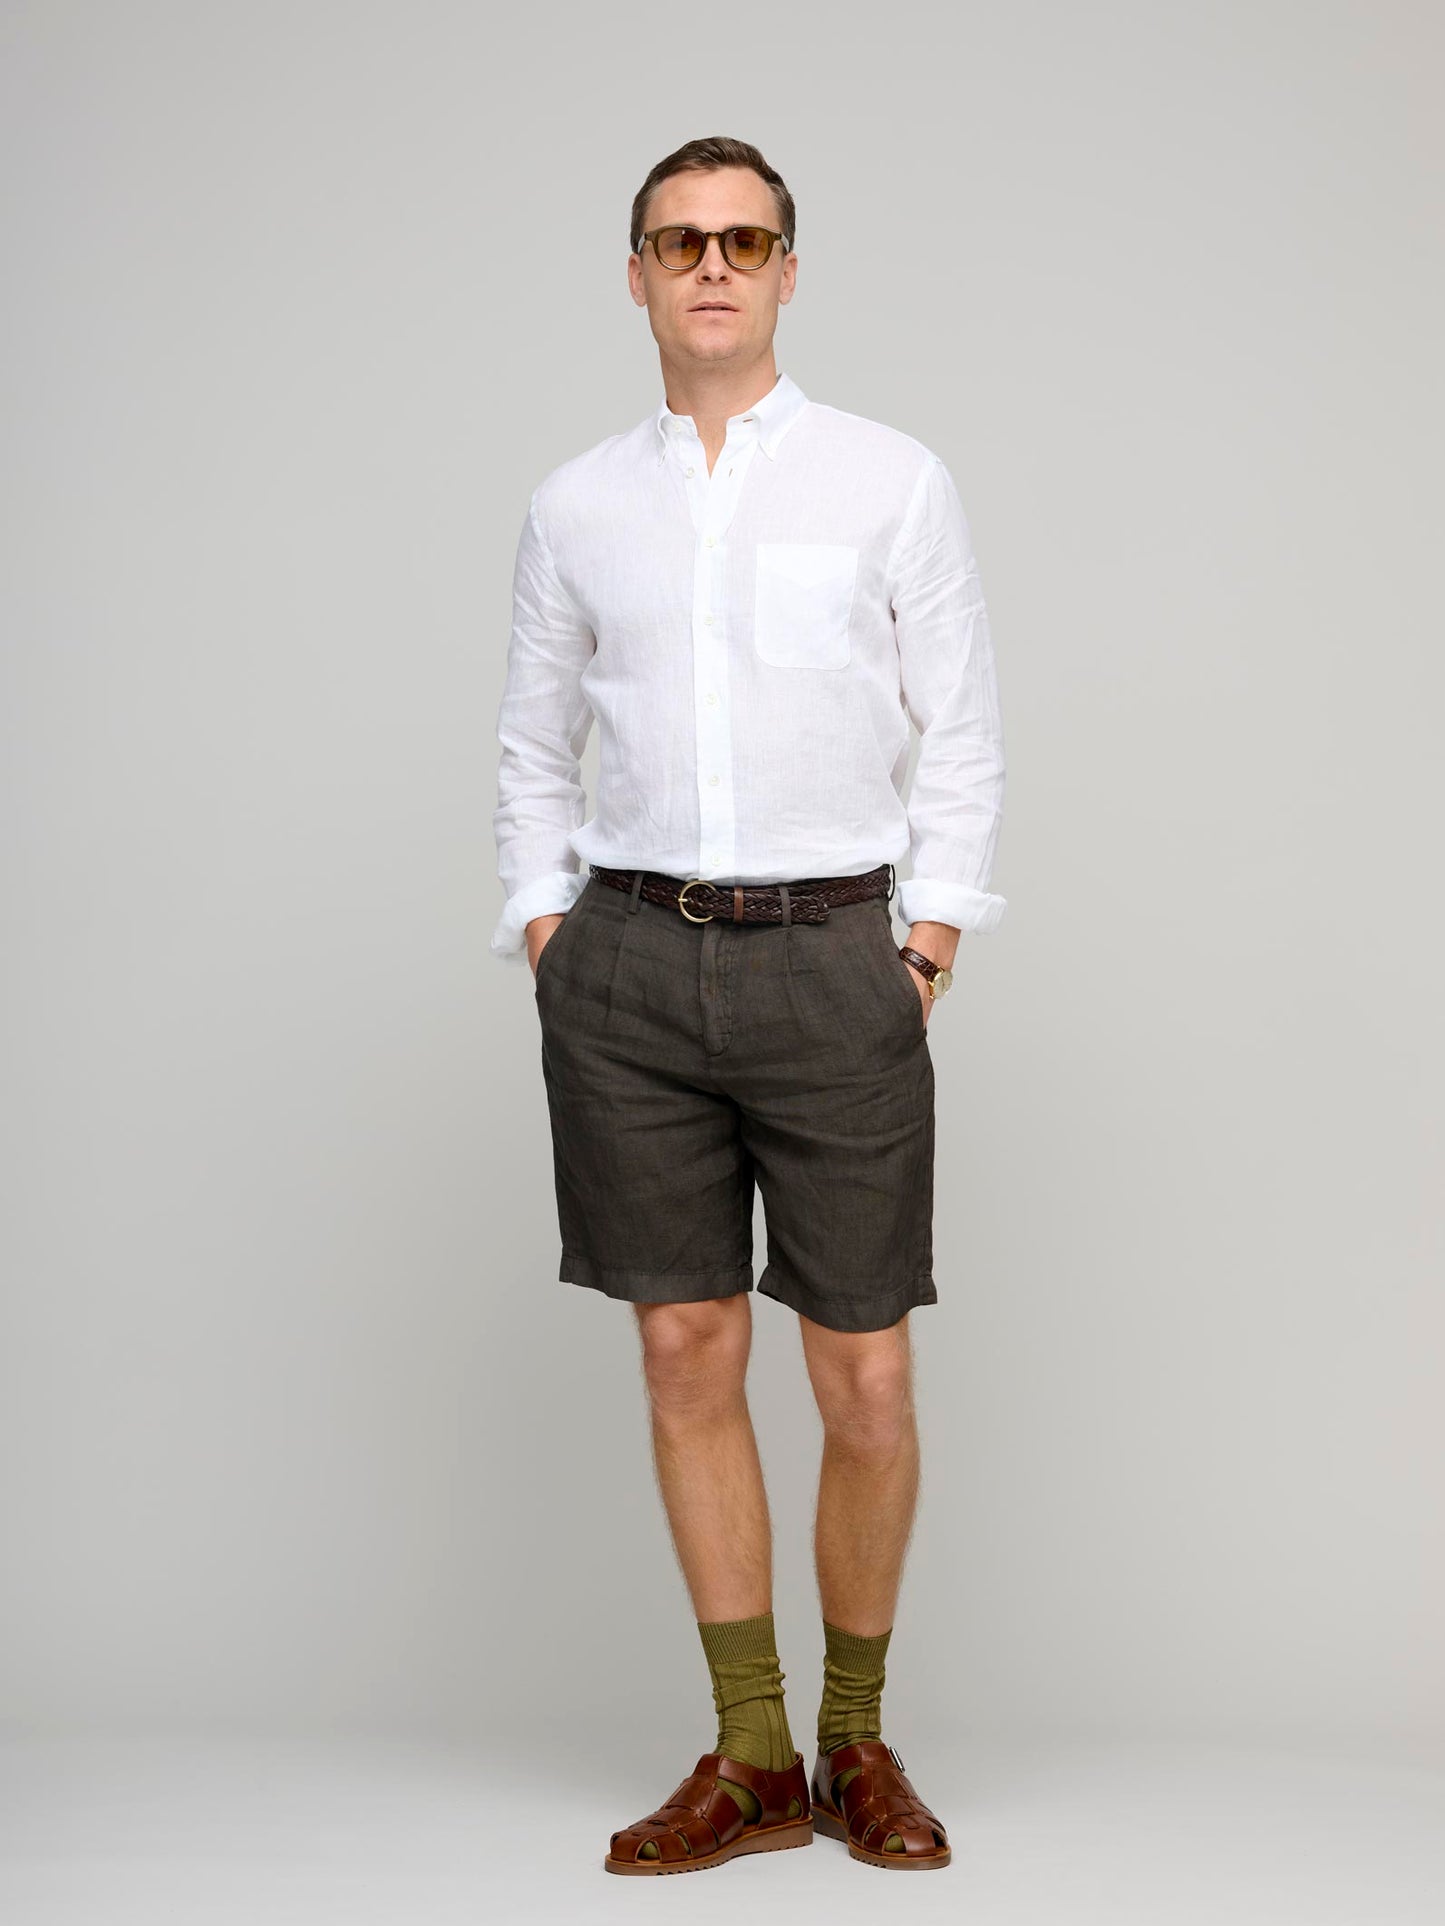 Bermuda Linen Shorts, Brown